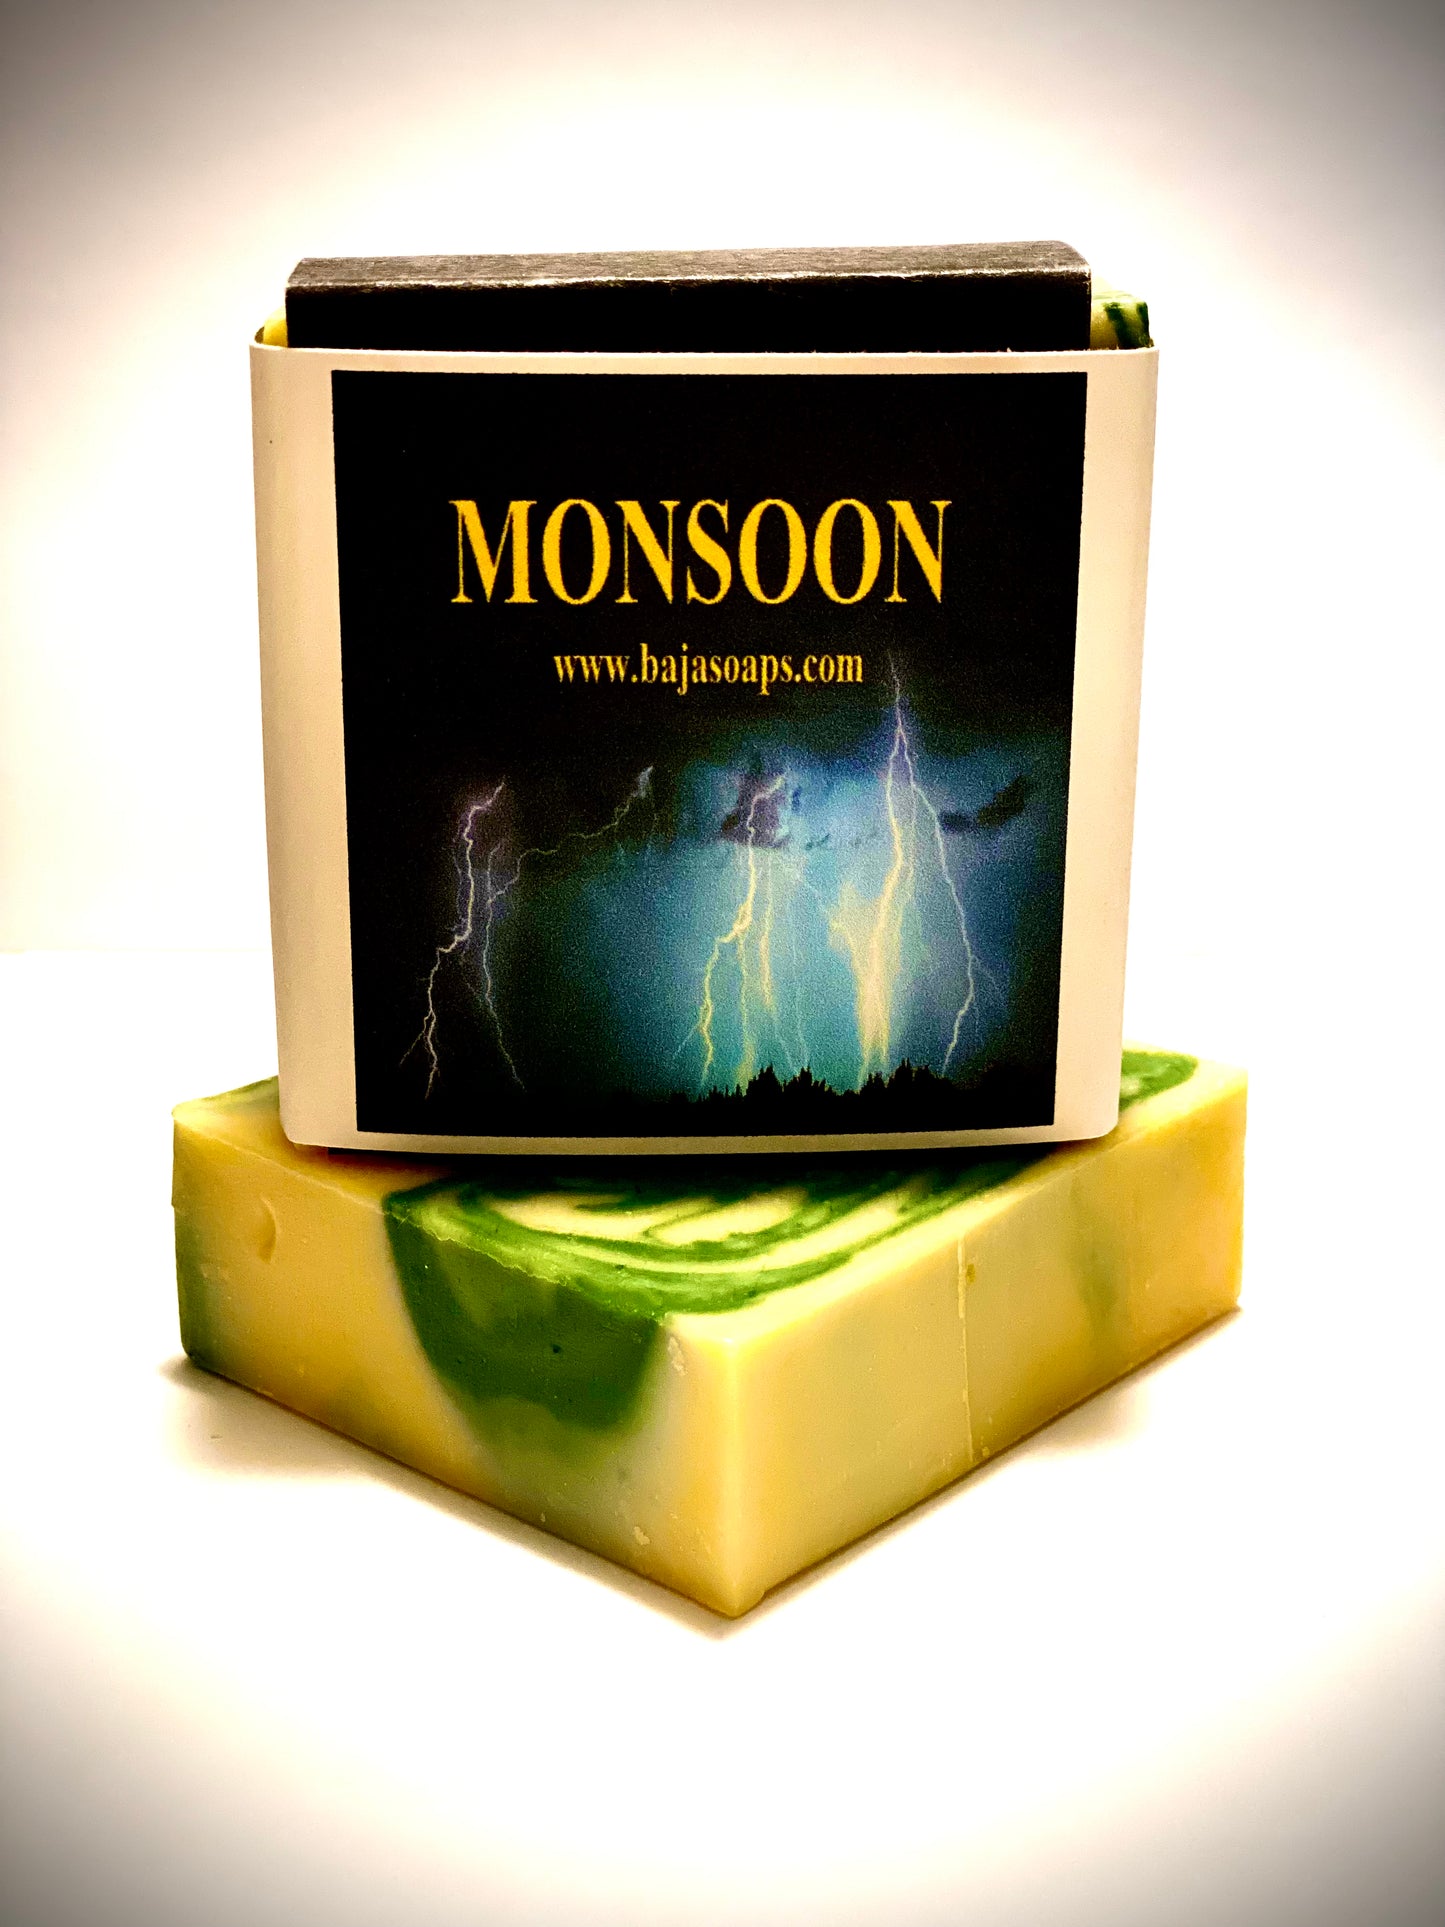 MONSOON - 5 oz soap bar